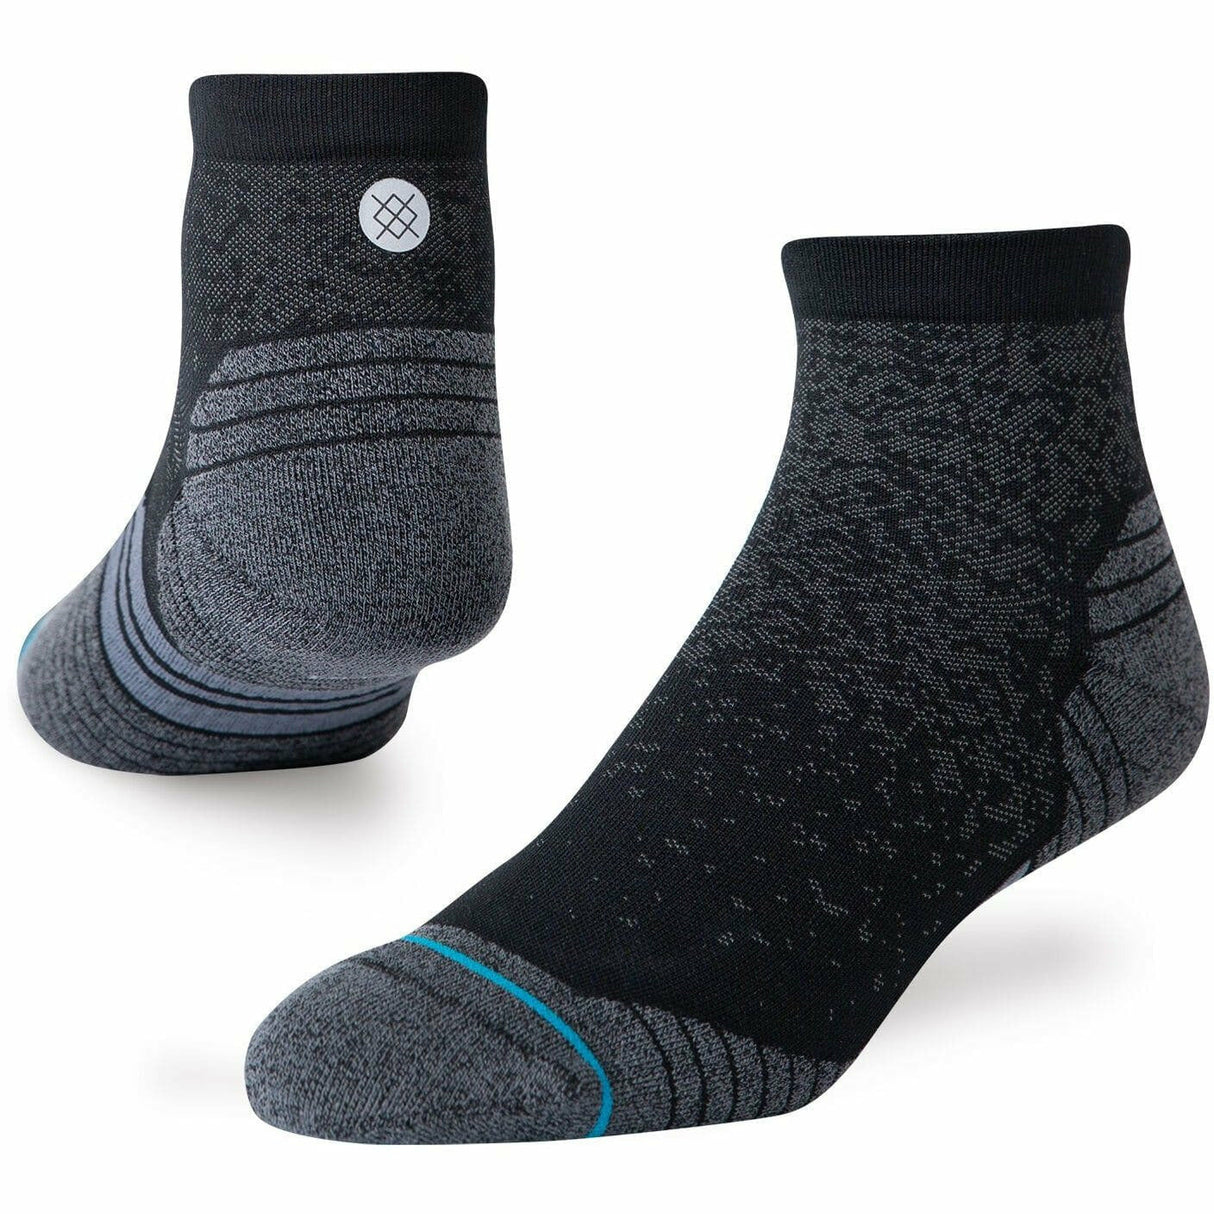 Stance Run Quarter ST Socks  -  Medium / Black